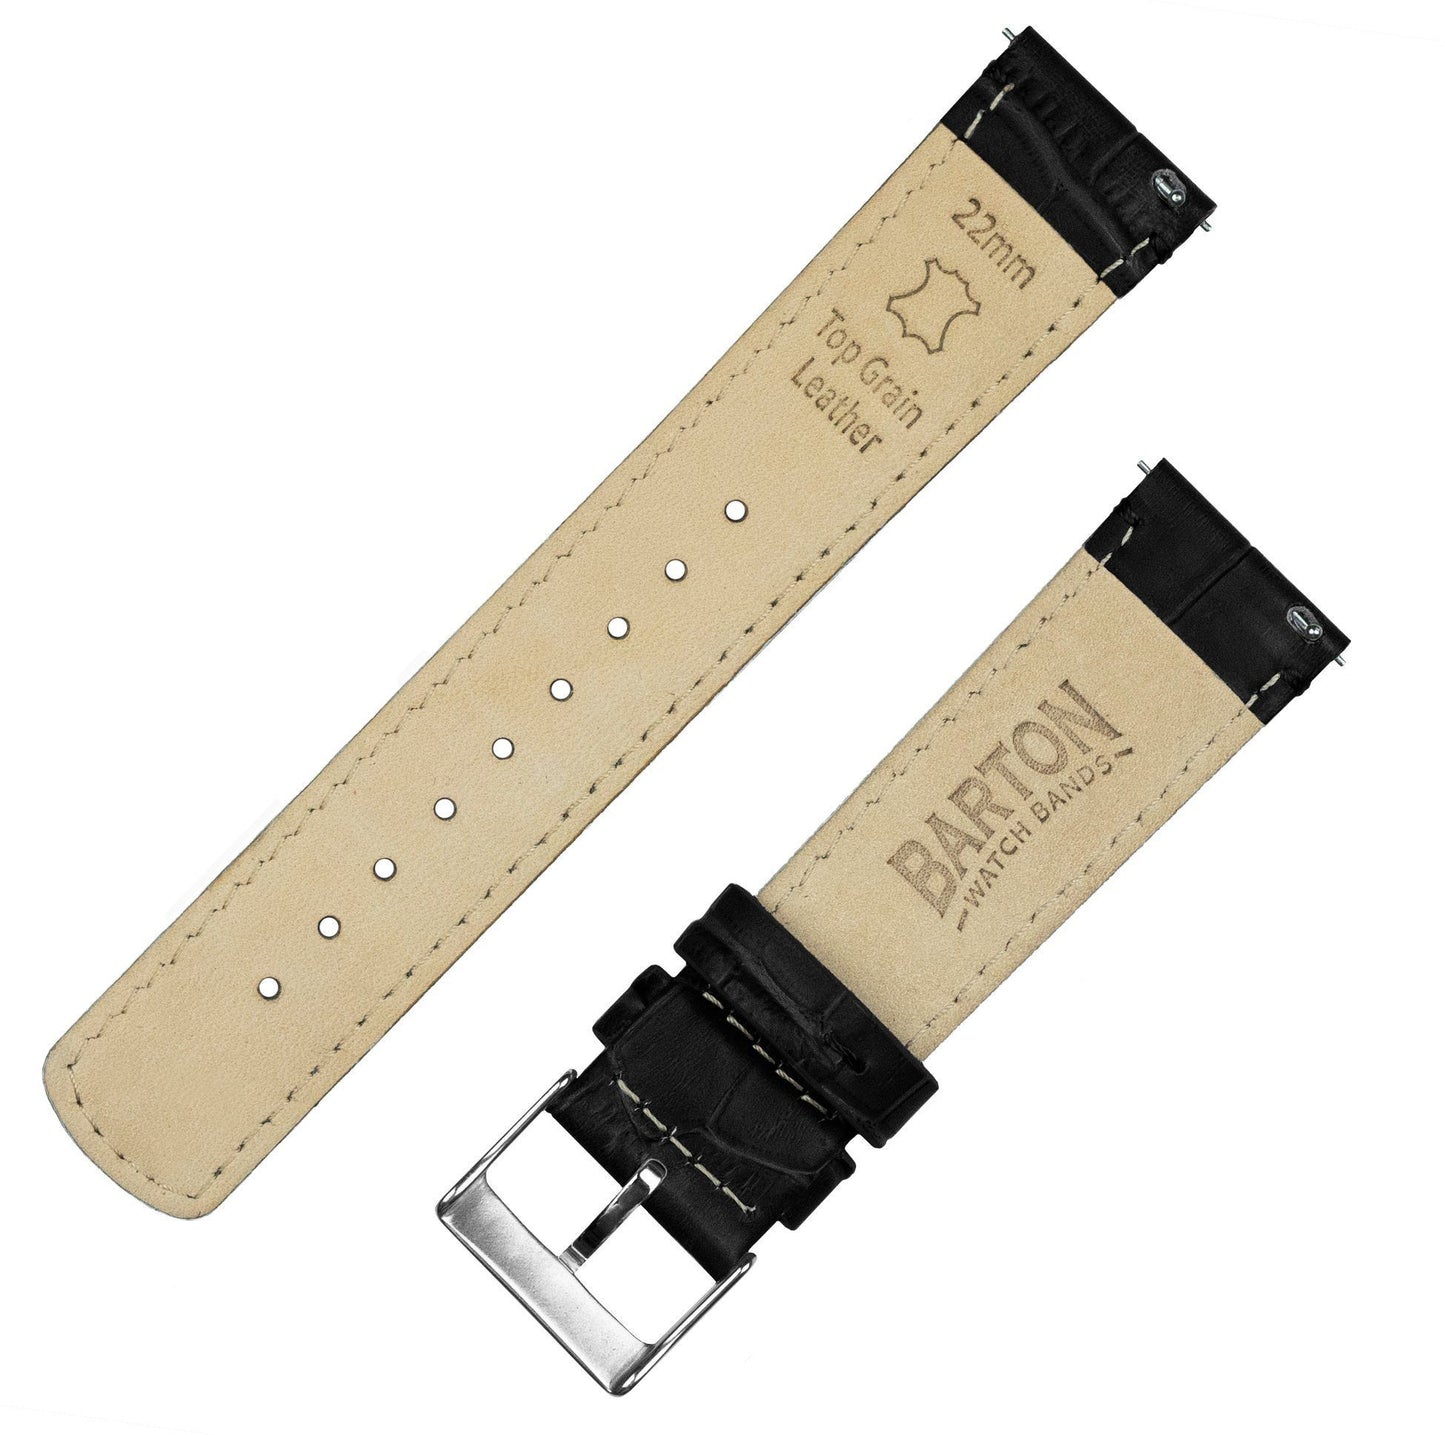 Samsung Galaxy Watch | Black Alligator Grain Leather - Barton Watch Bands